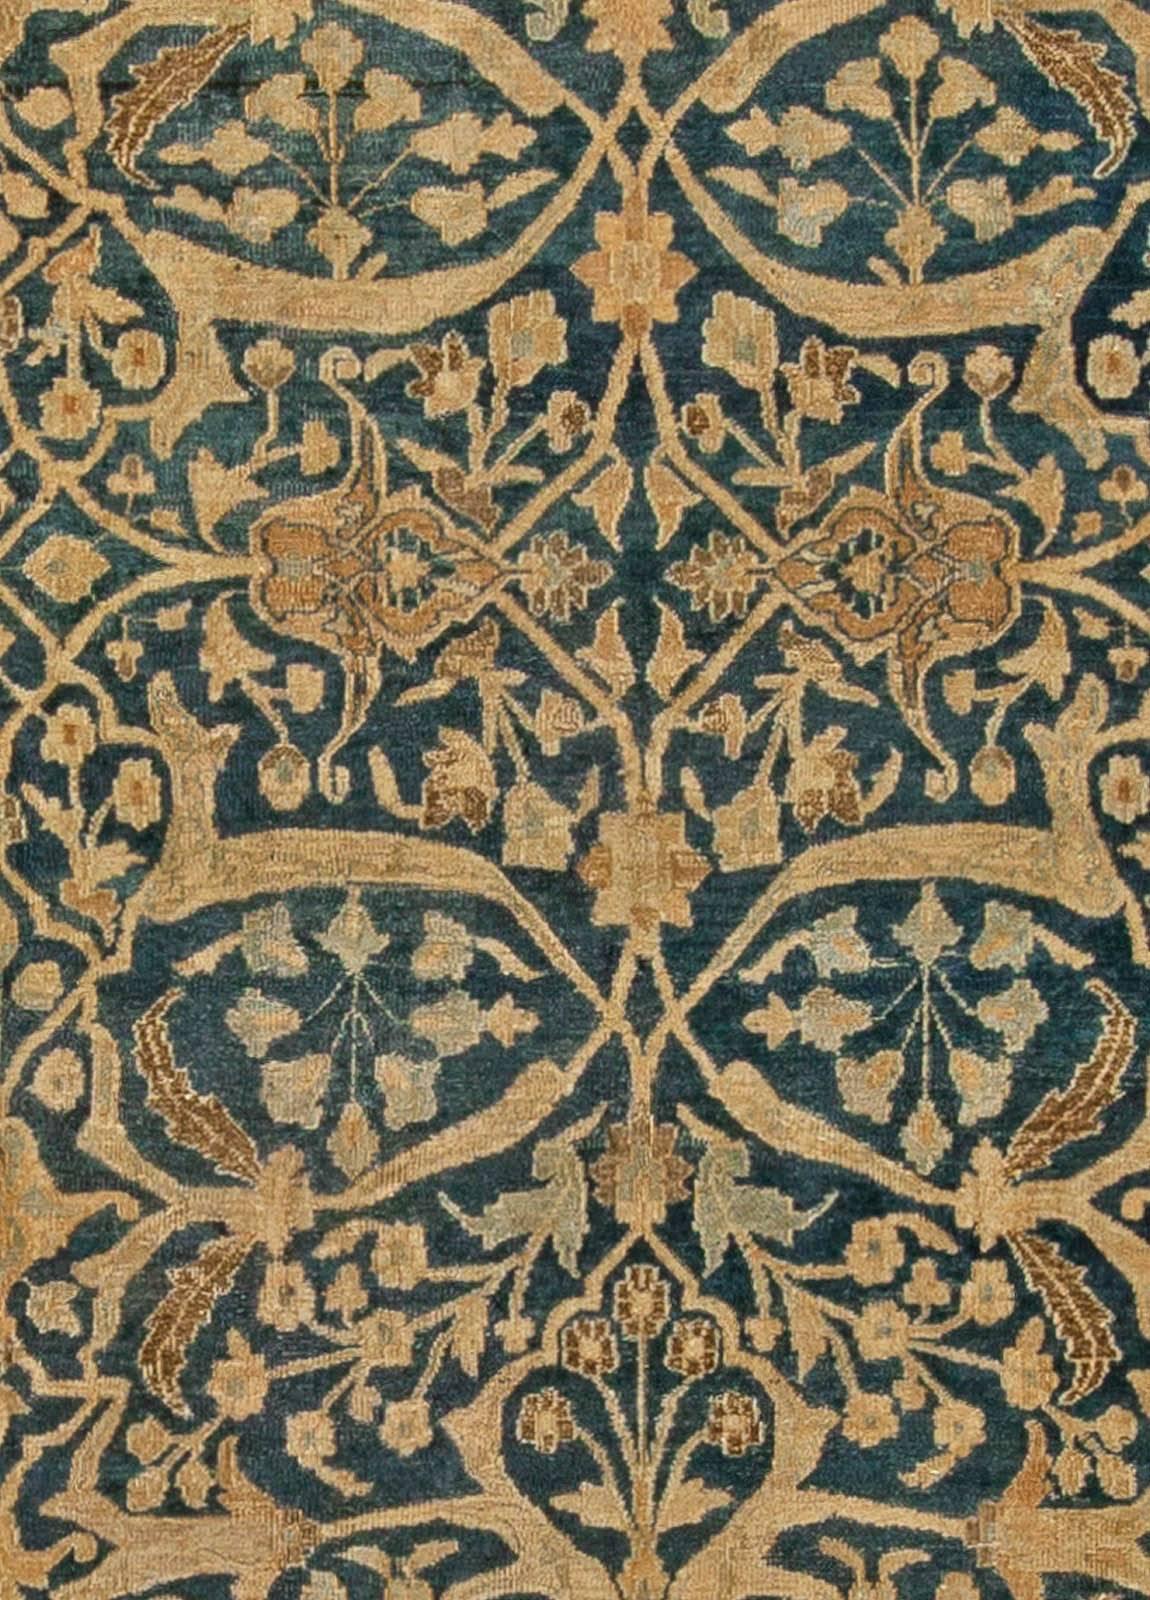 Antique Persian Meshad Botanic handwoven wool rug
Size: 10'3